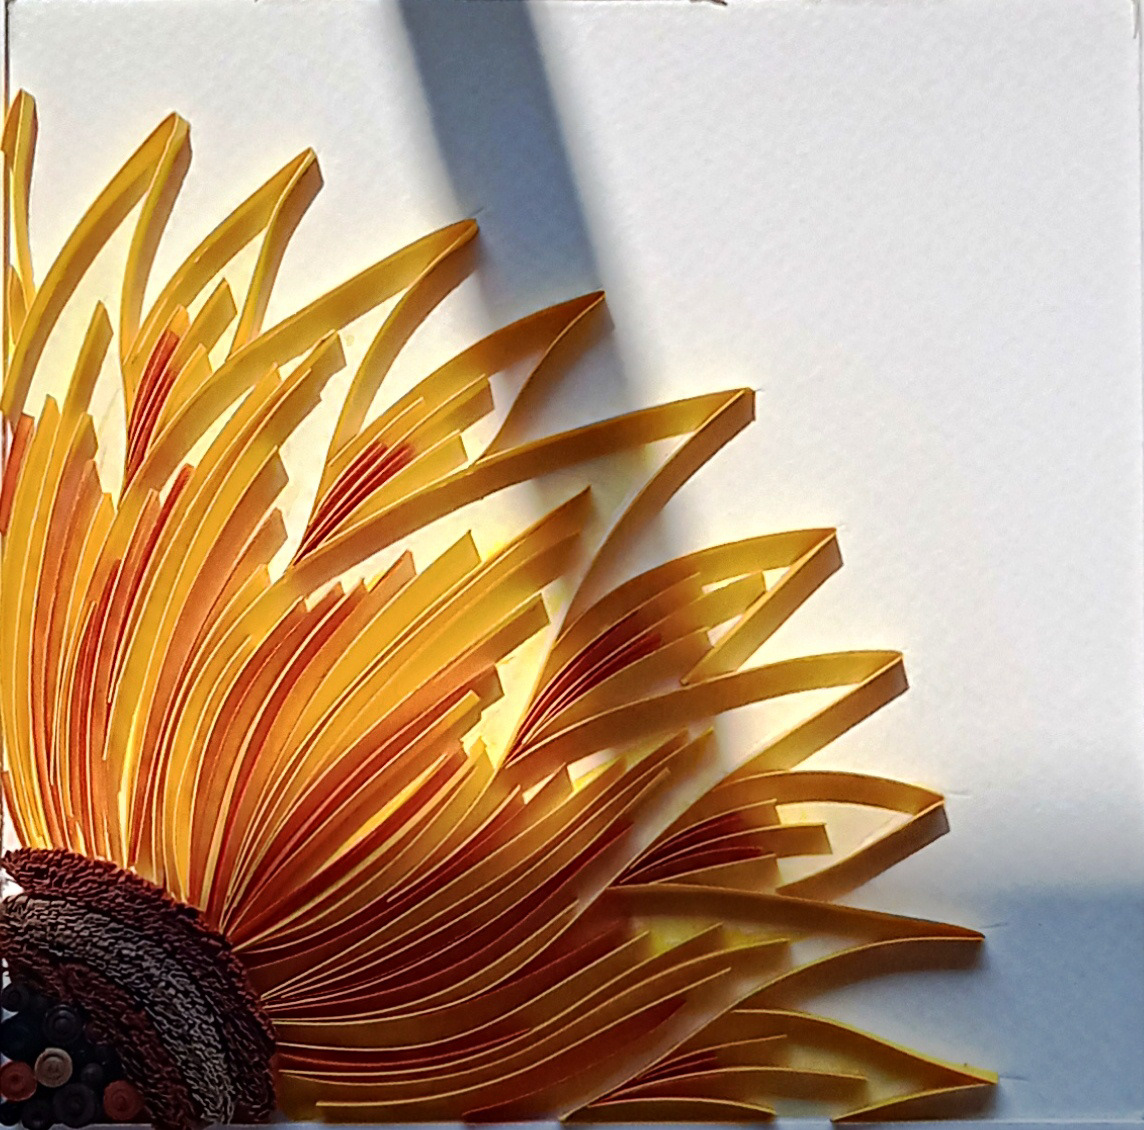 ILLUSTRATION  Paer art paper flowers Paper Illustration paper quilling sunflower